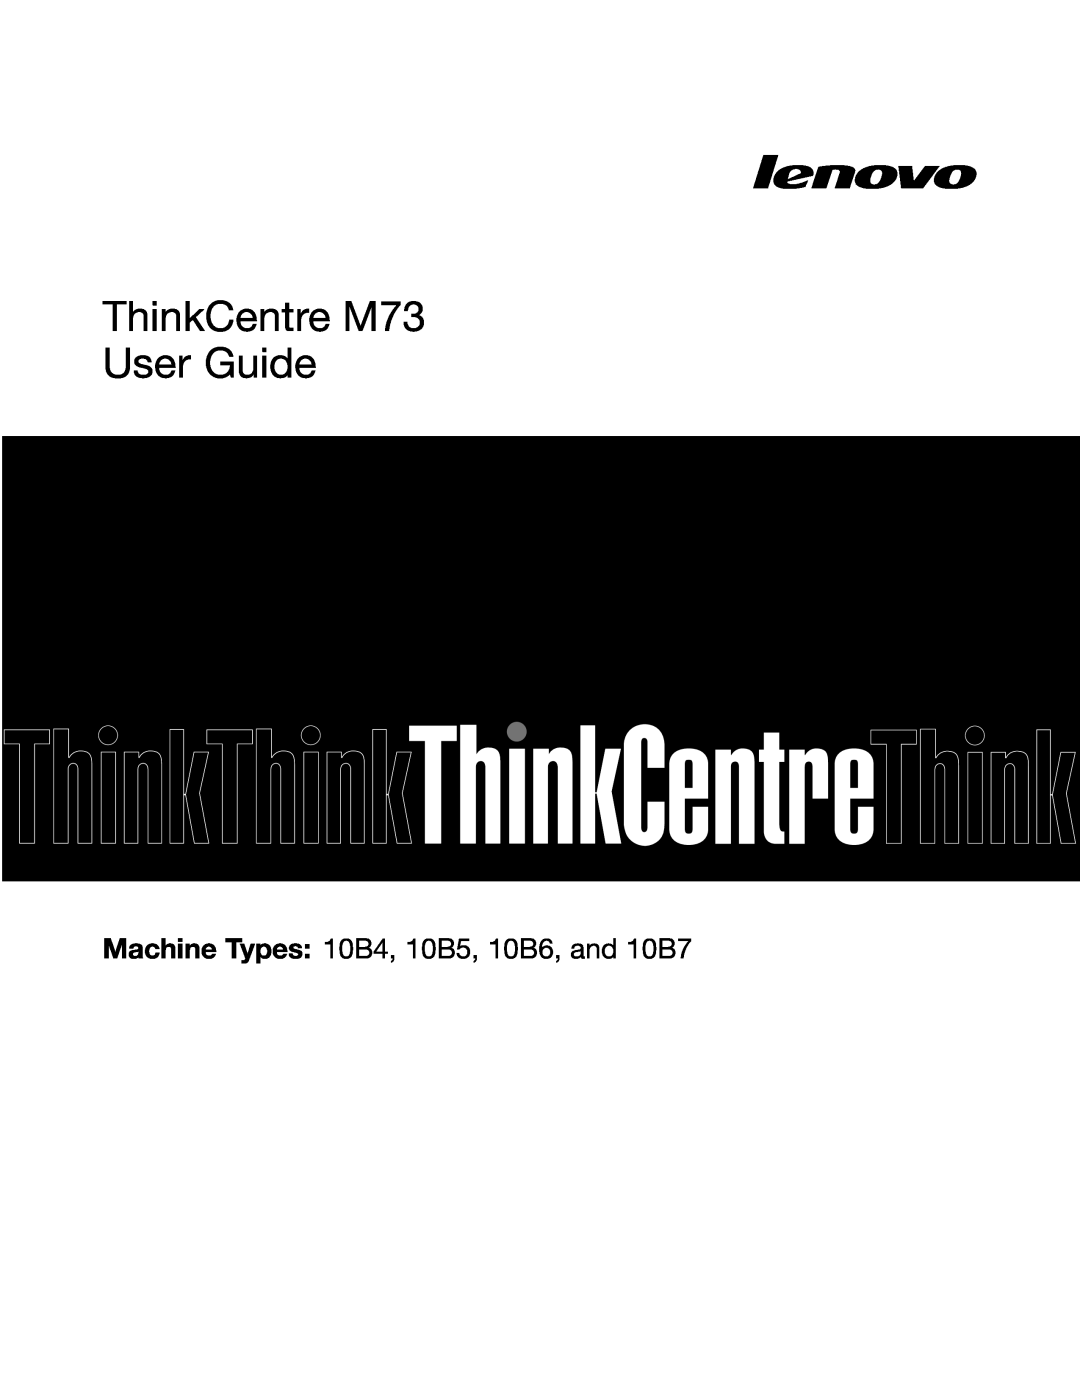 Lenovo manual ThinkCentre M73 User Guide, Machine Types 10B4, 10B5, 10B6, and 10B7 